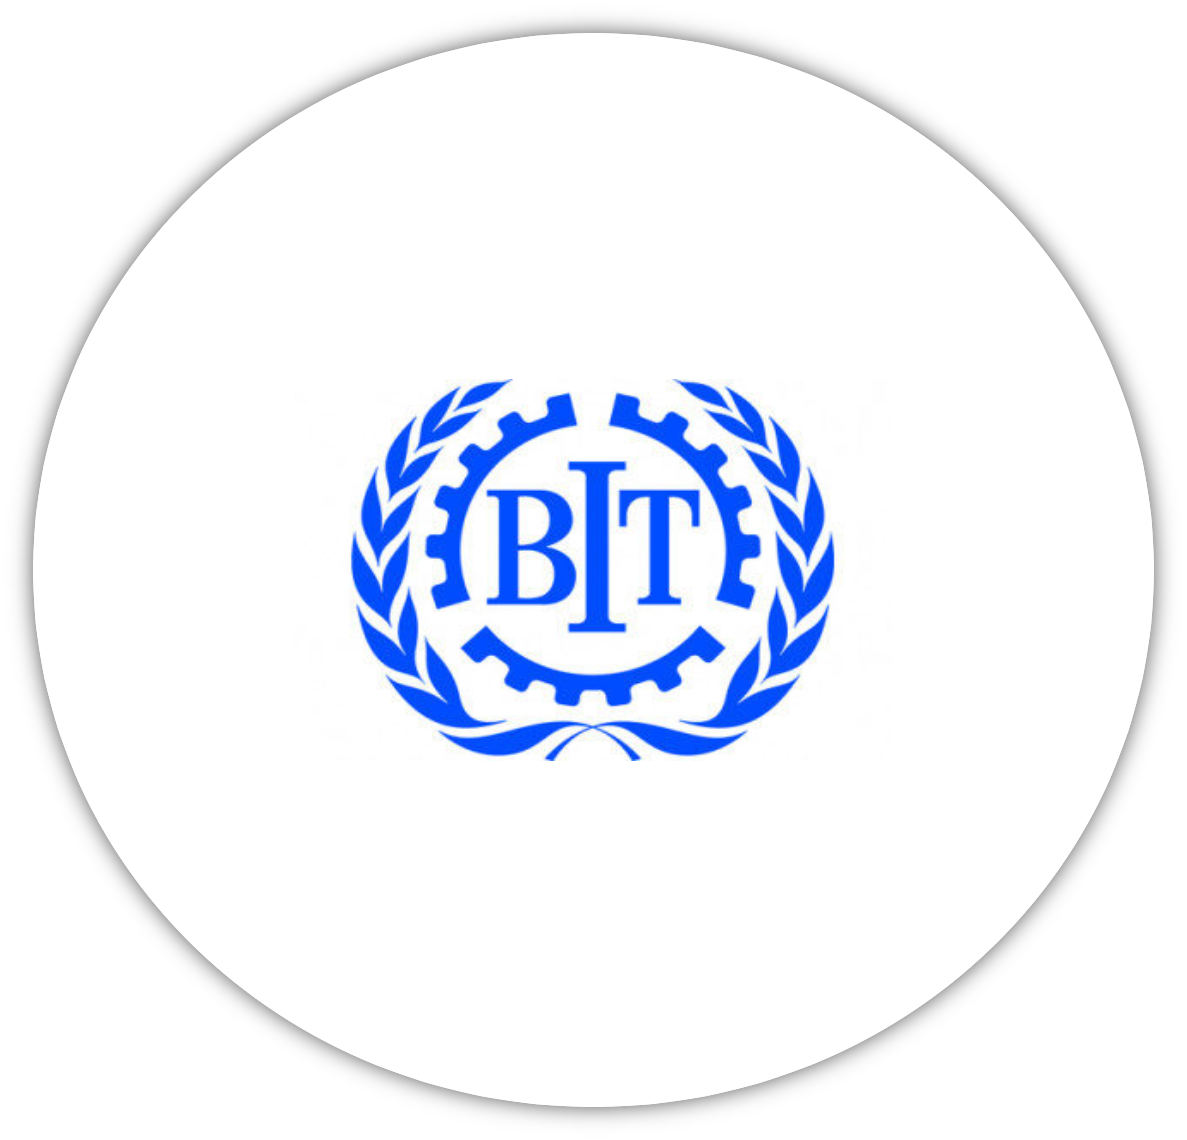 logo-bit